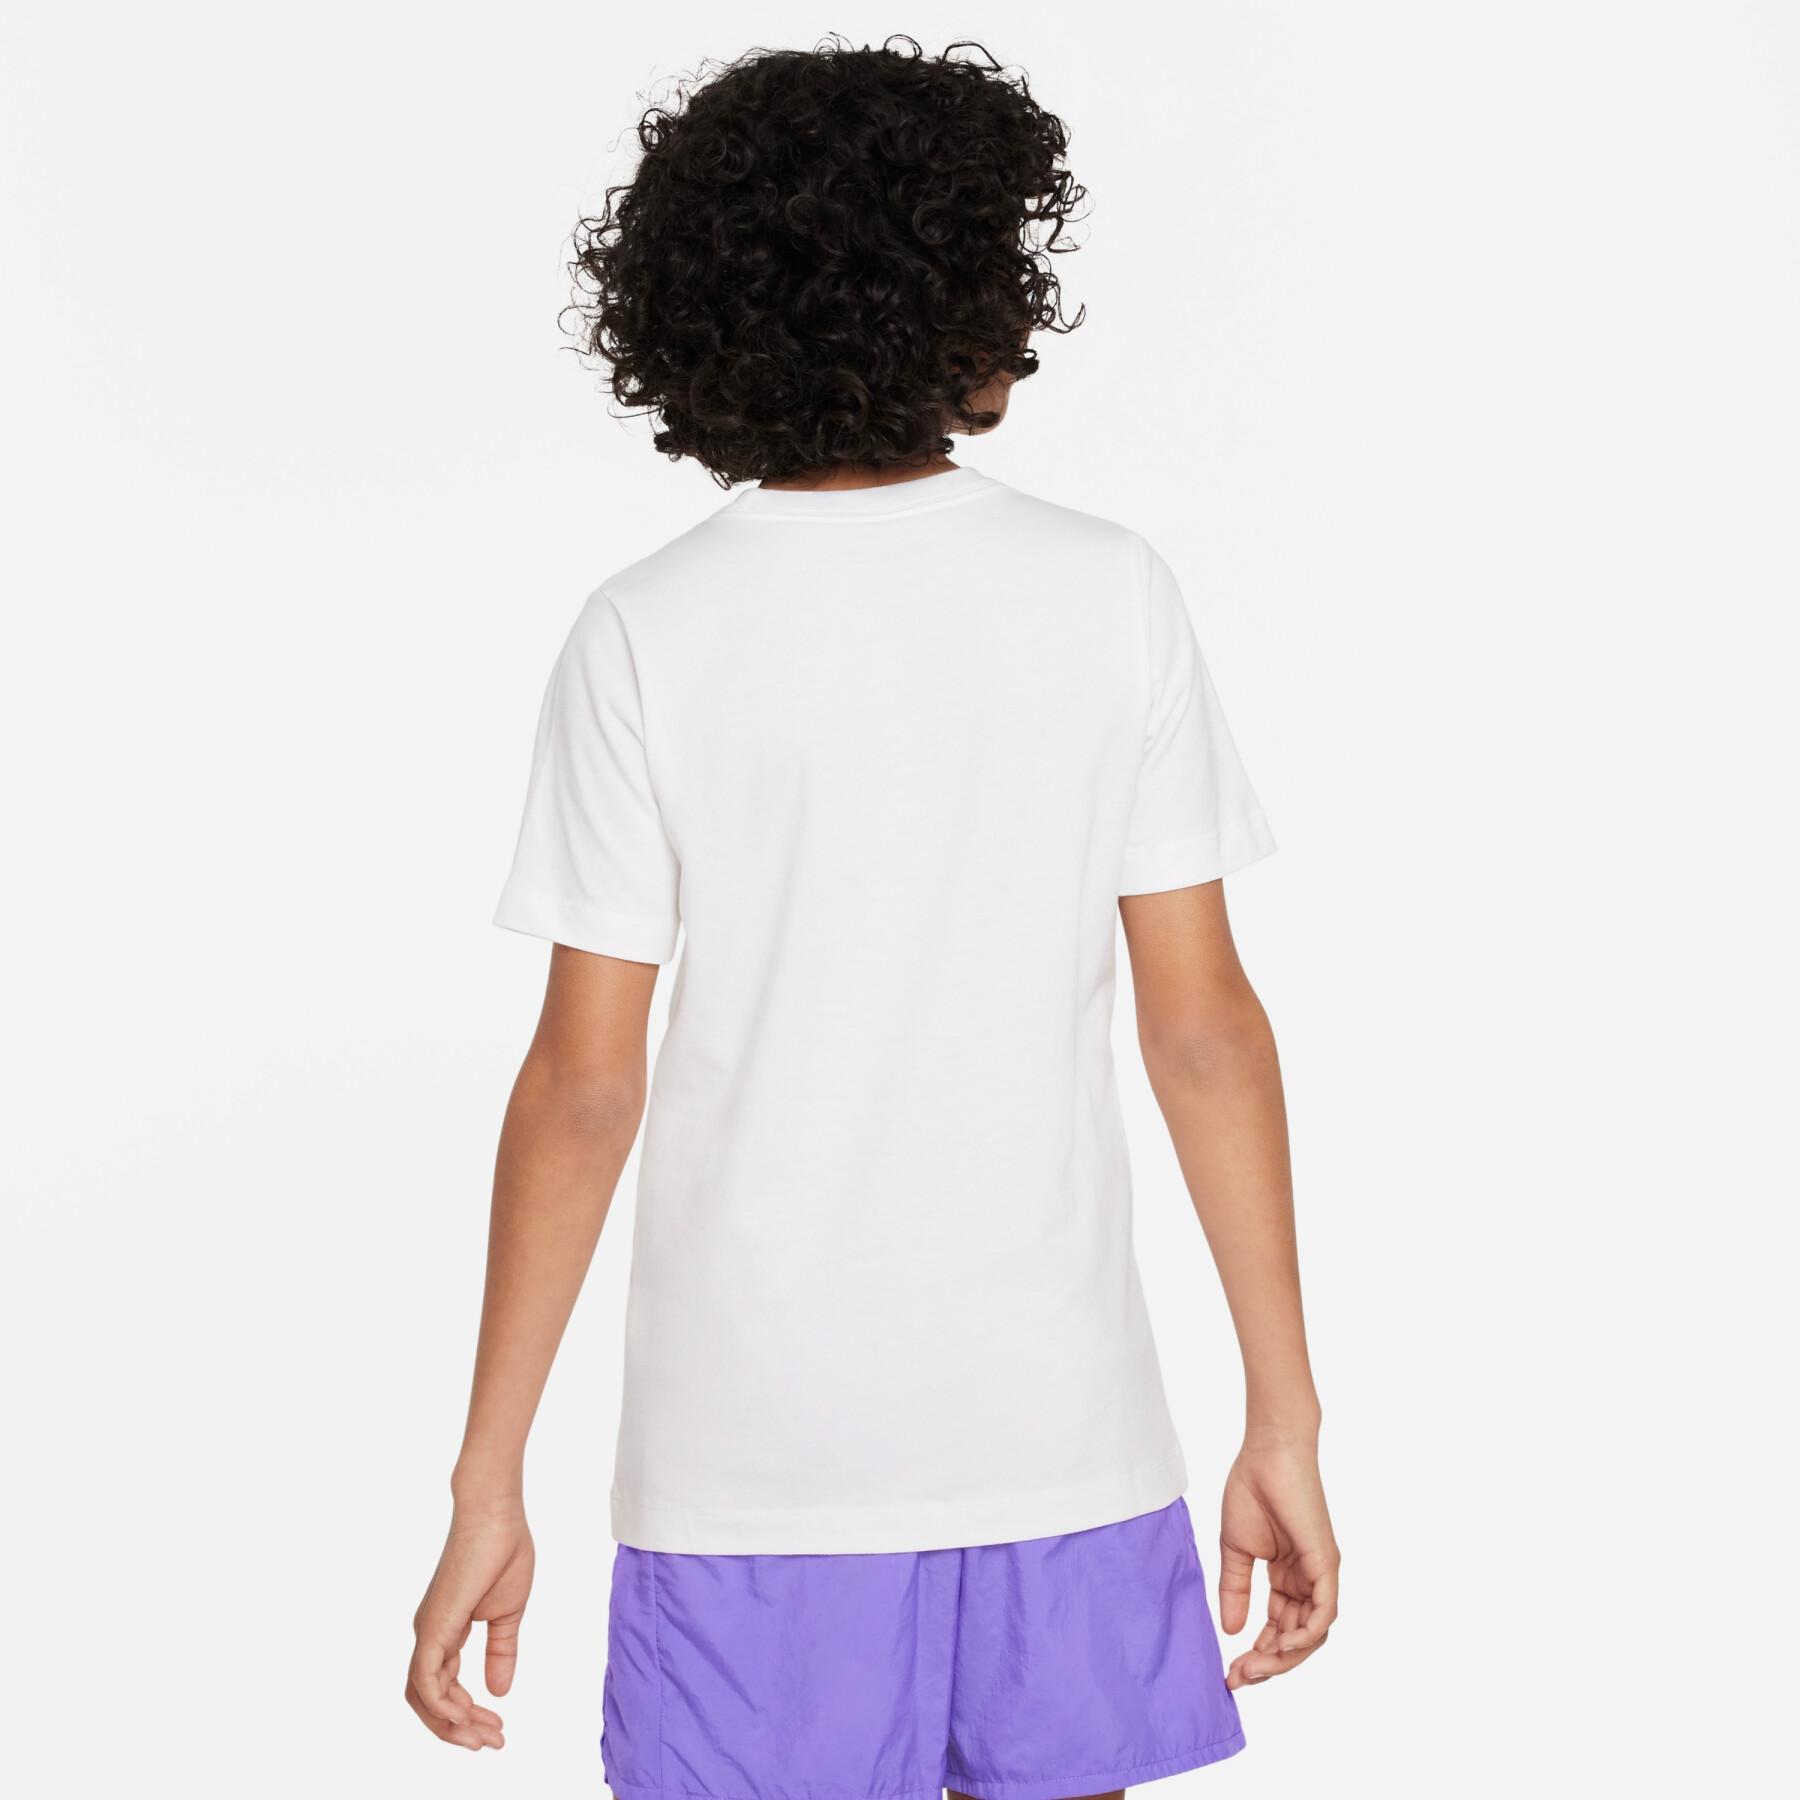 T-shirt per bambini Nike Basketball Ball